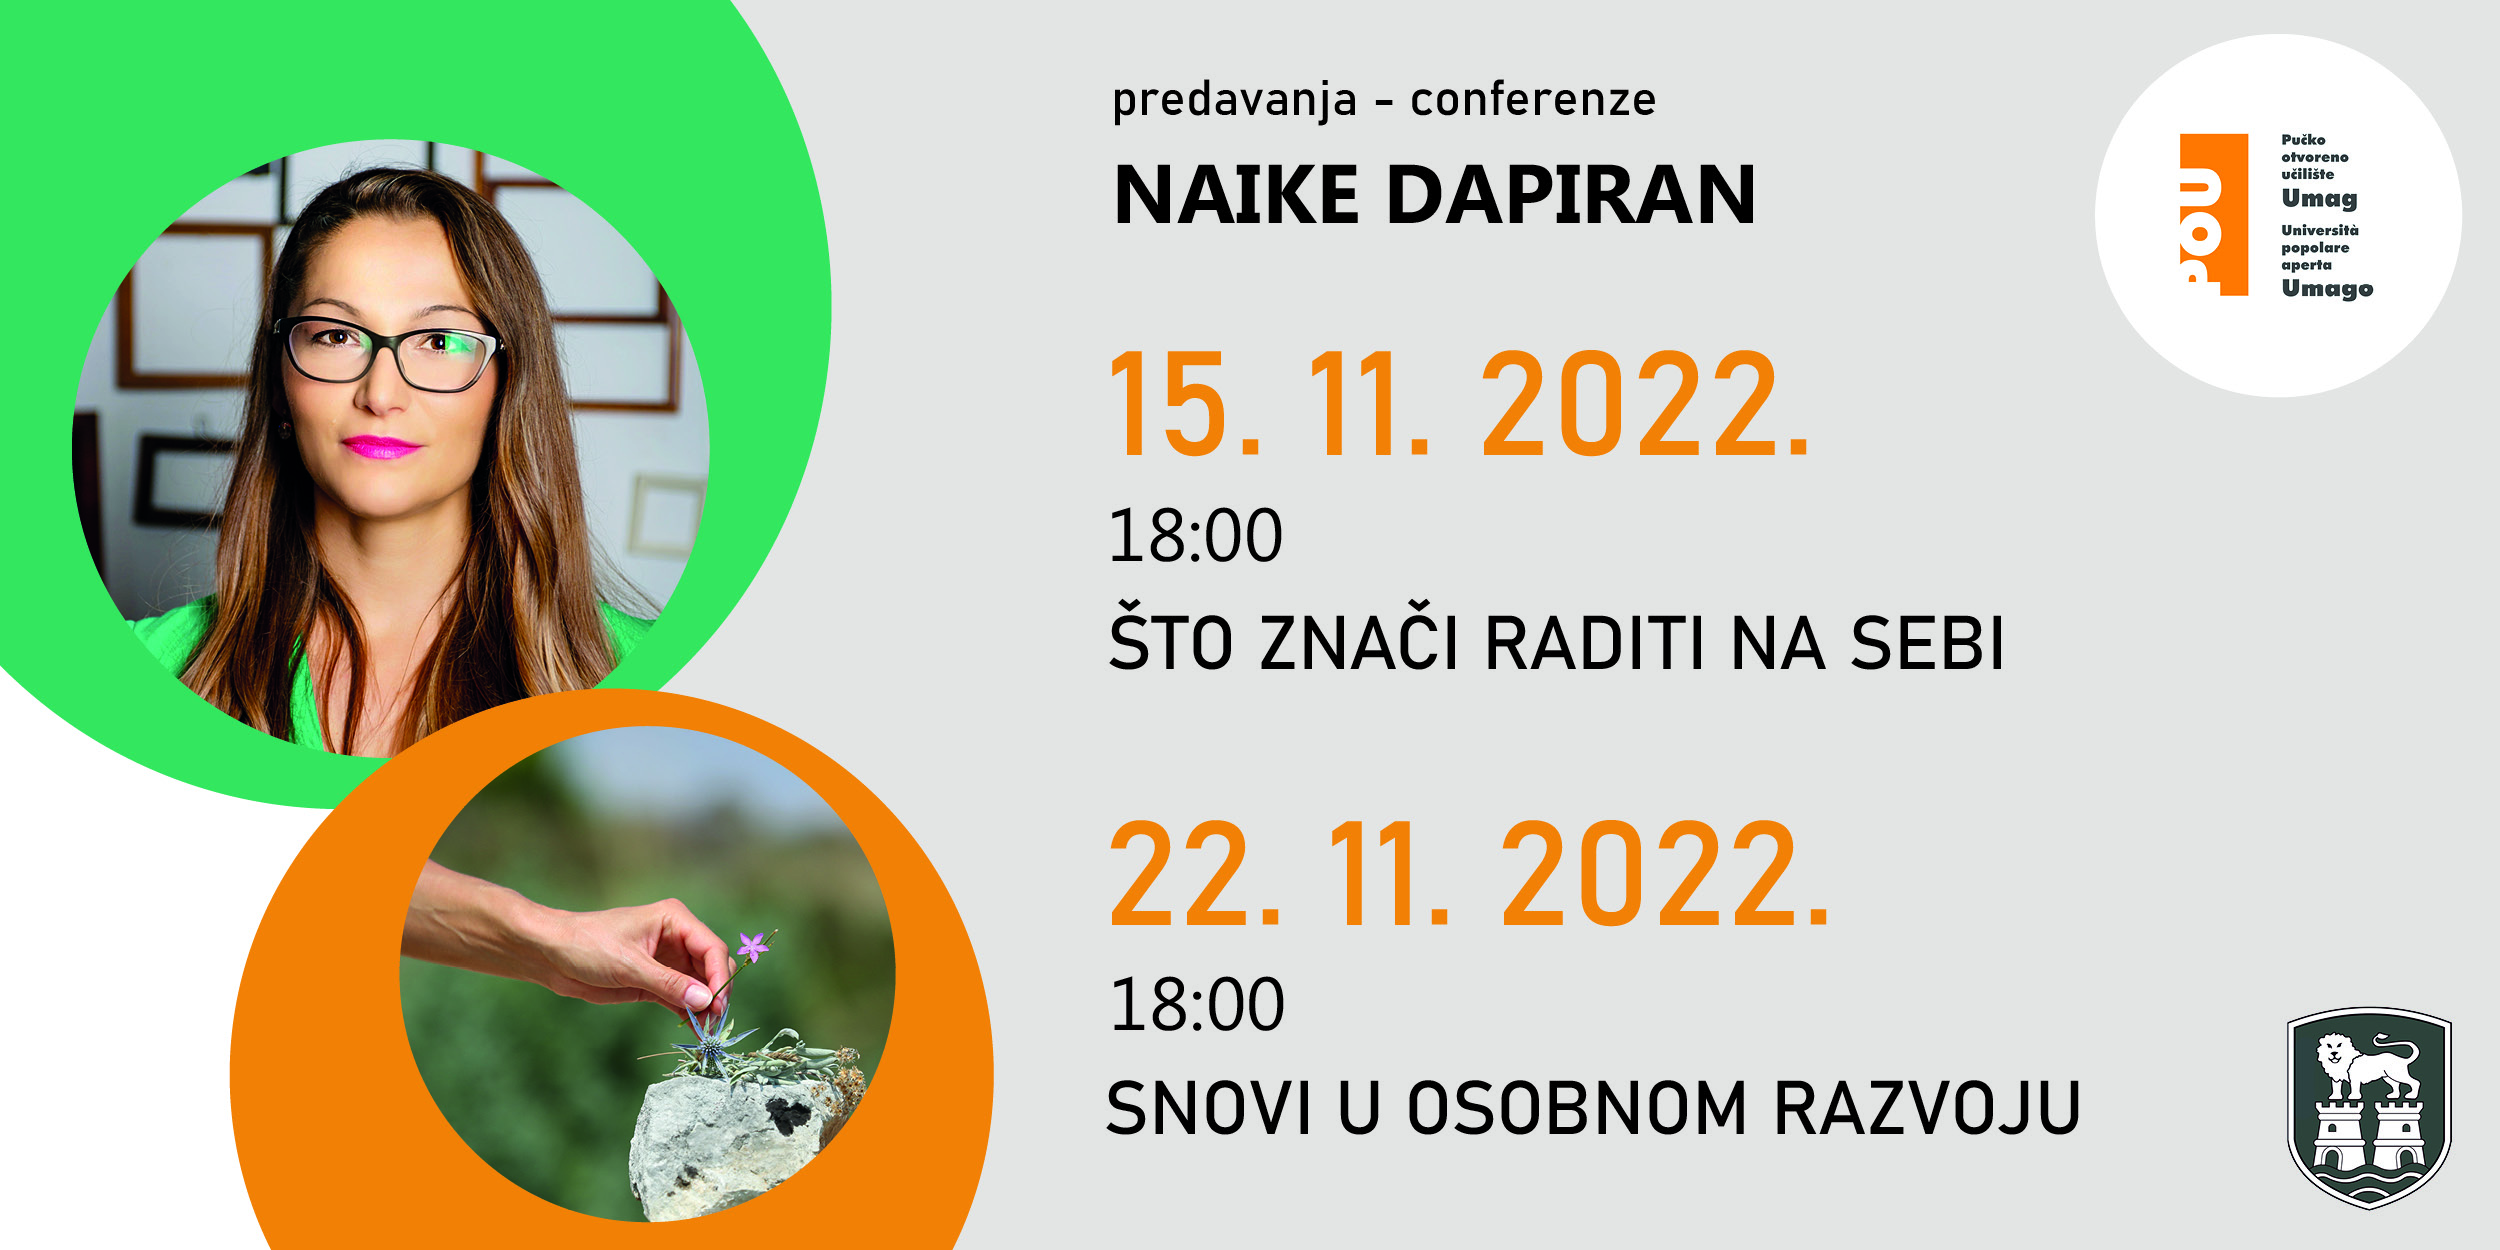 Javna predavanja s Naike Dapiran - Uskoro!!!